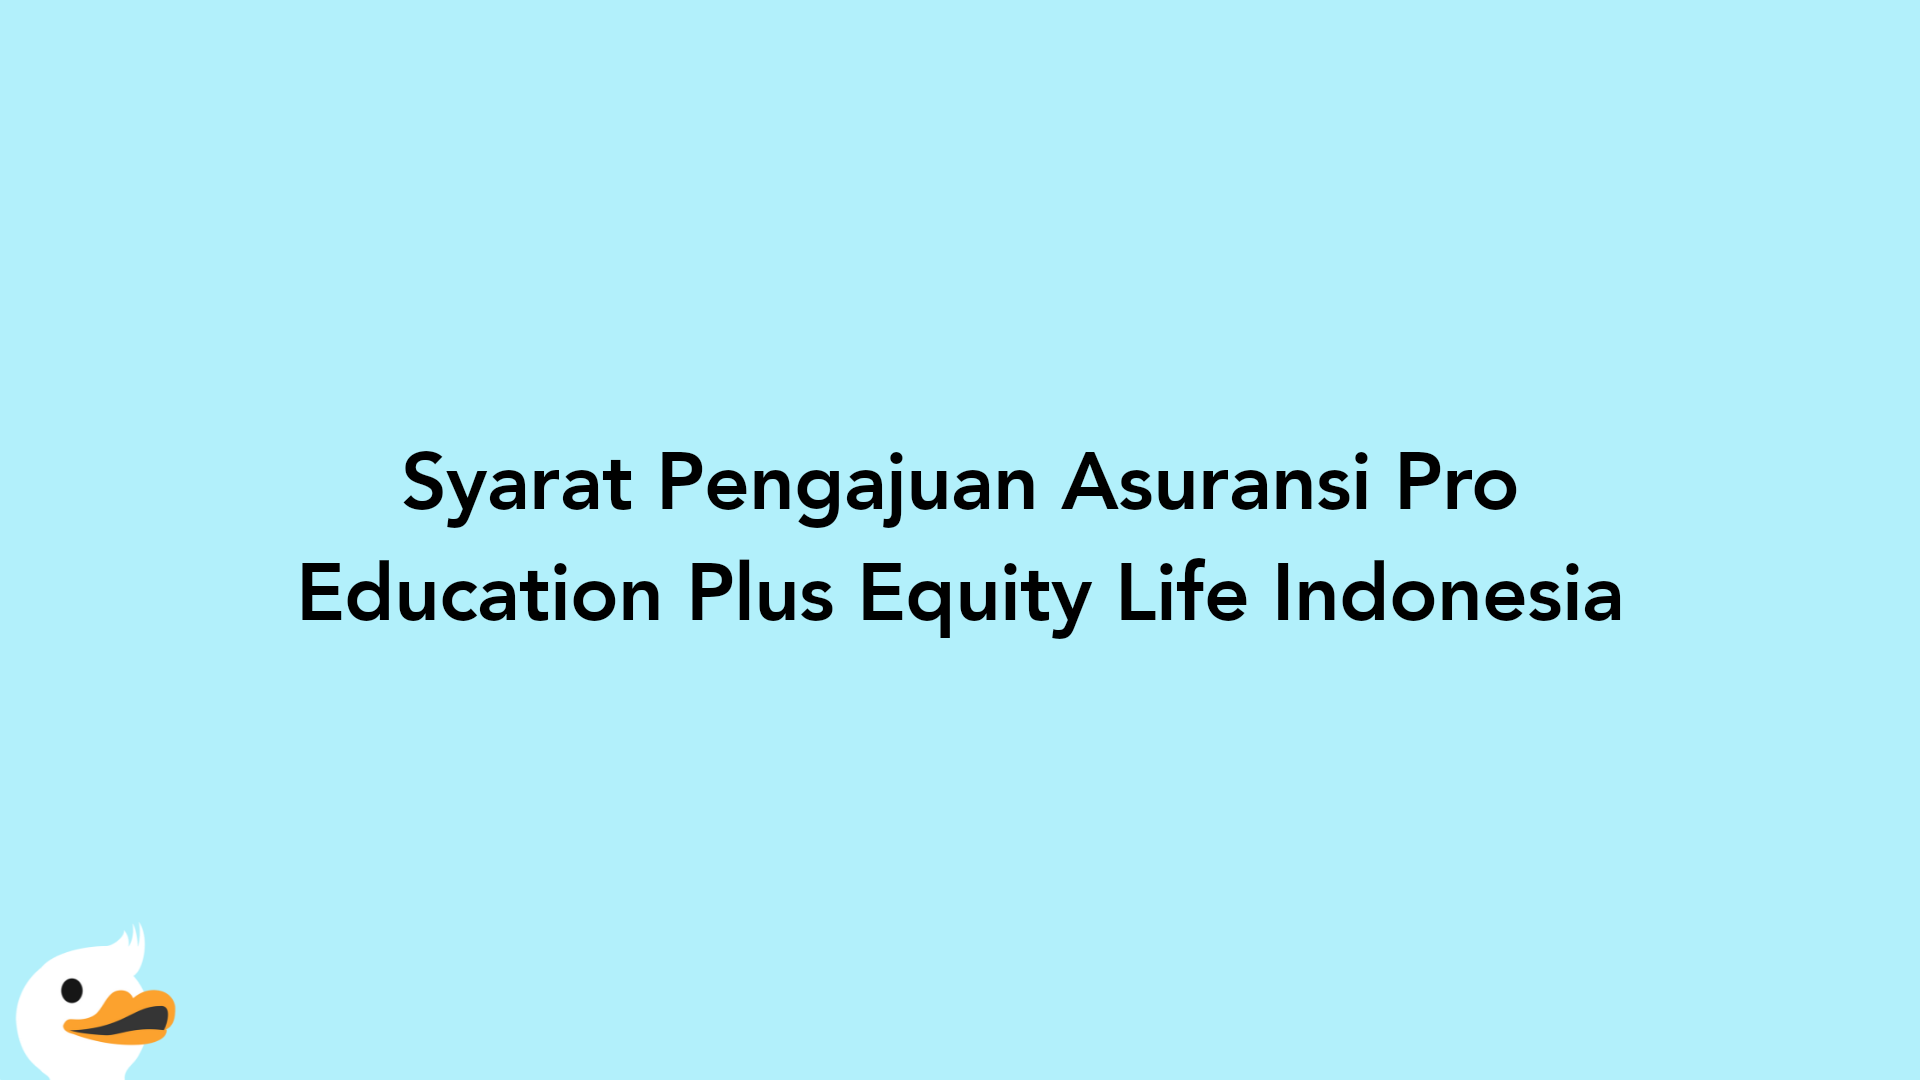 Syarat Pengajuan Asuransi Pro Education Plus Equity Life Indonesia